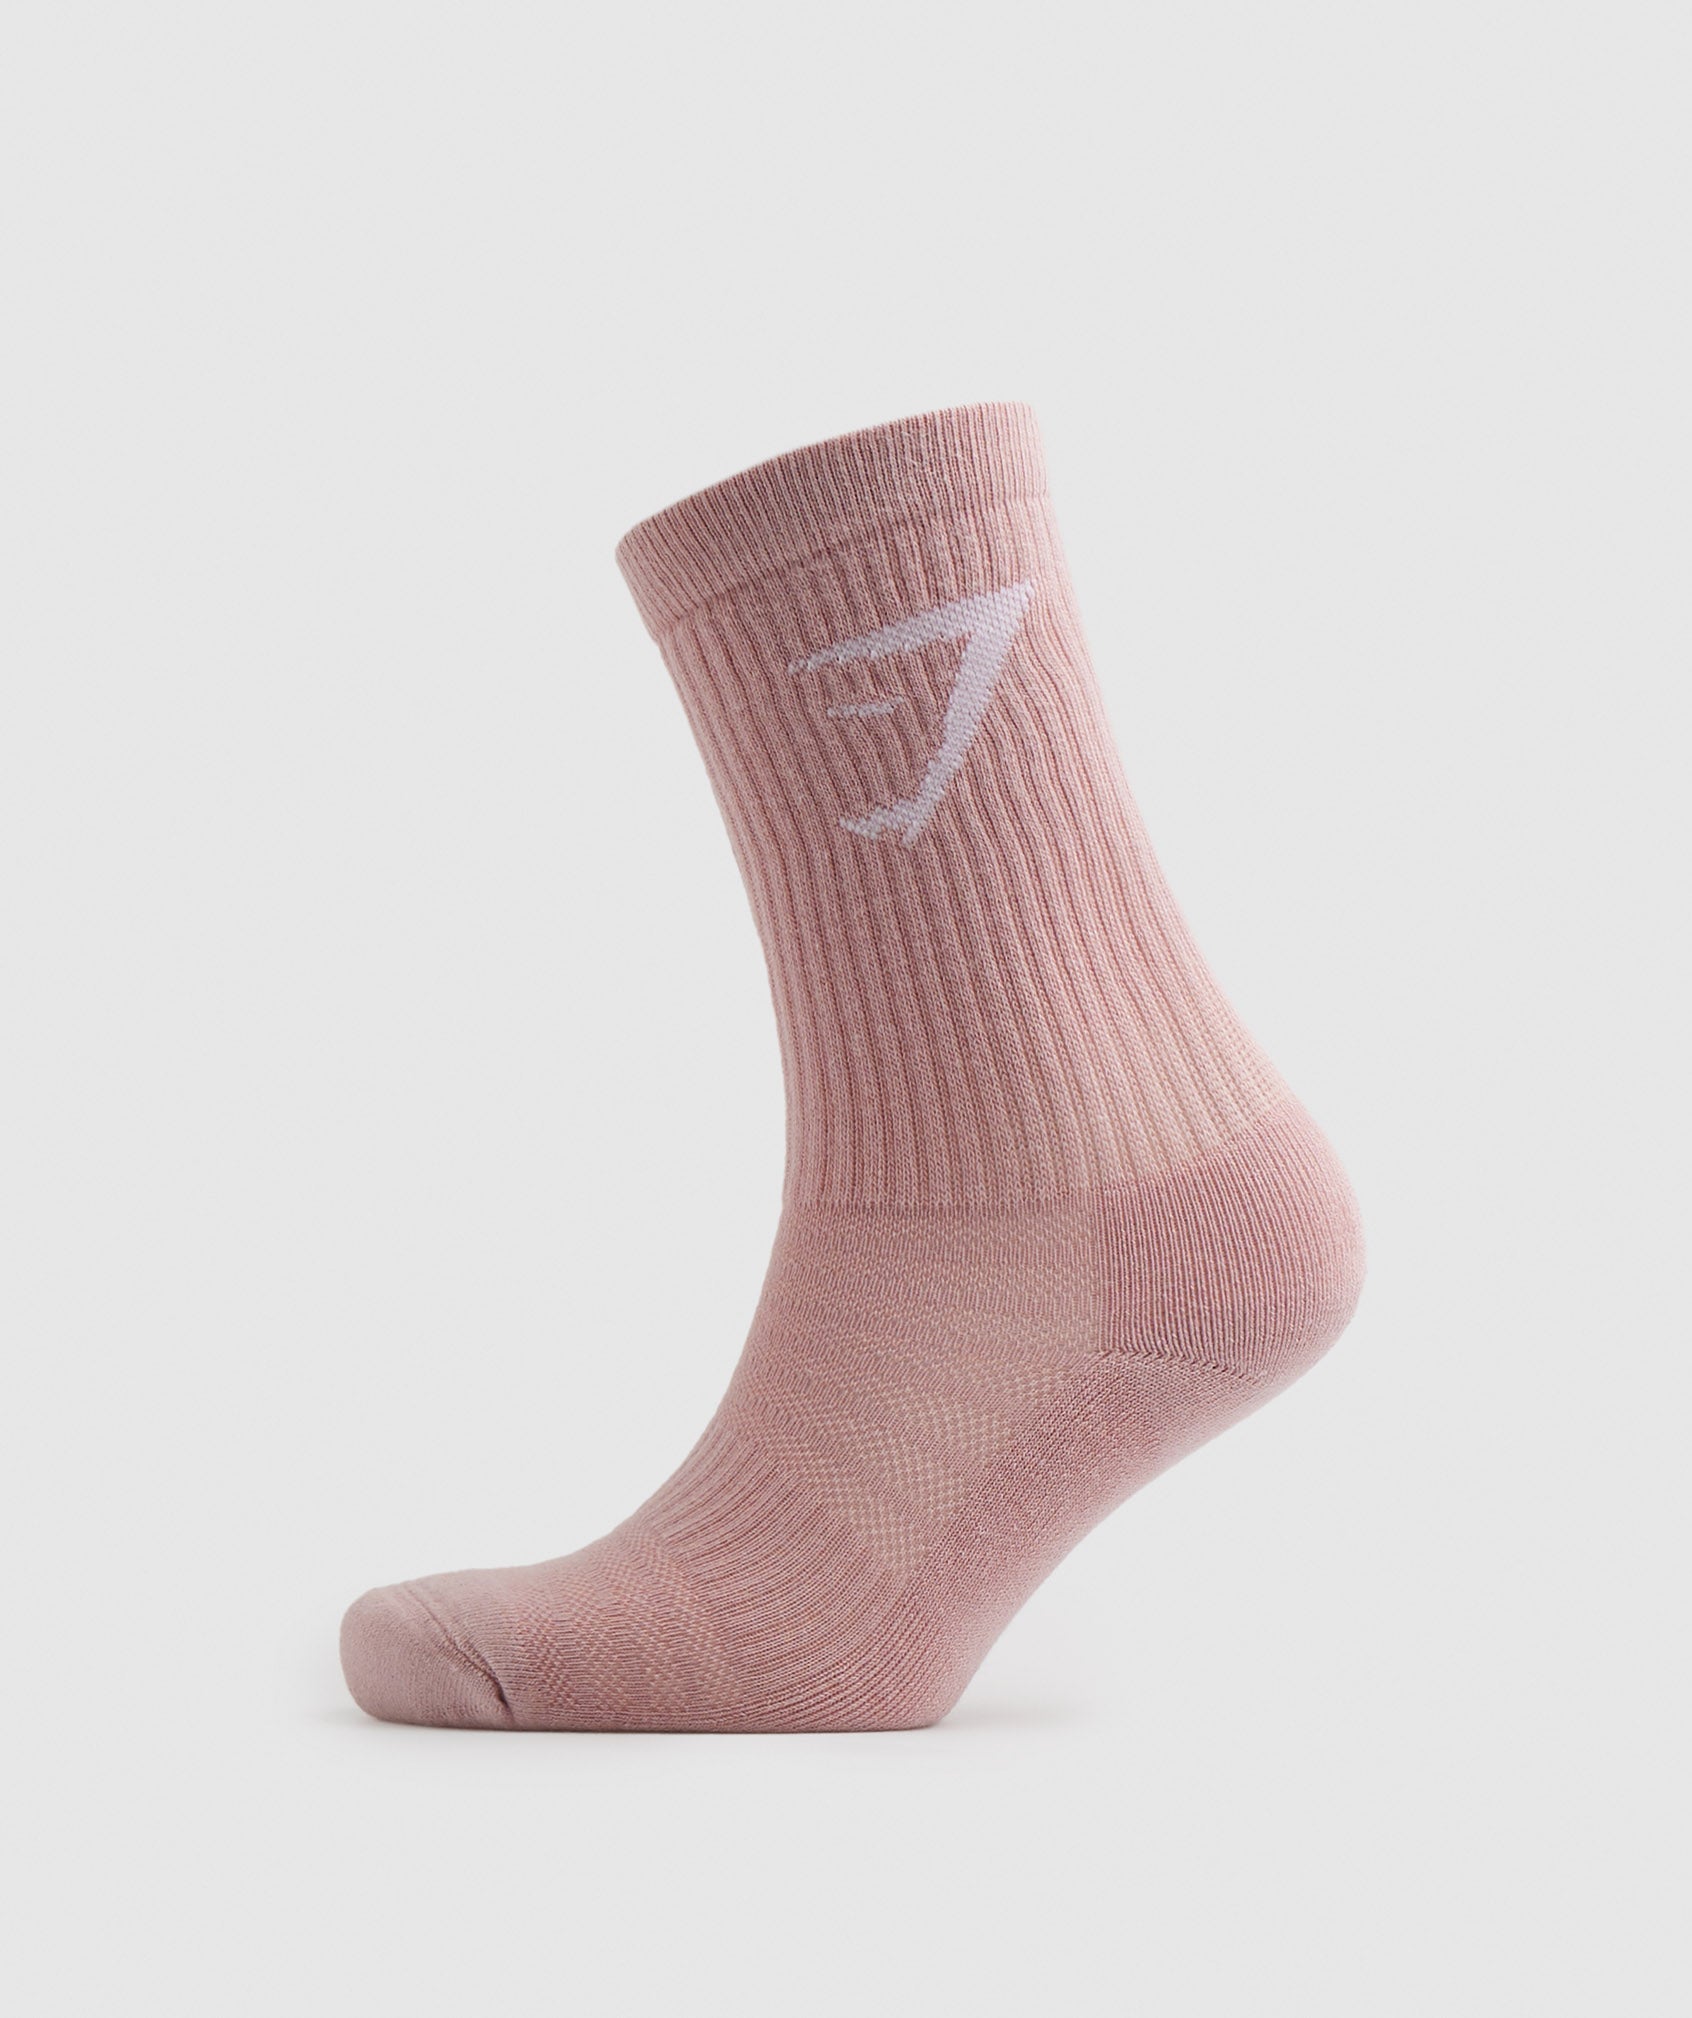 Crew Socks 5pk in Pink/Brown/Grey/Green/Olive - view 6